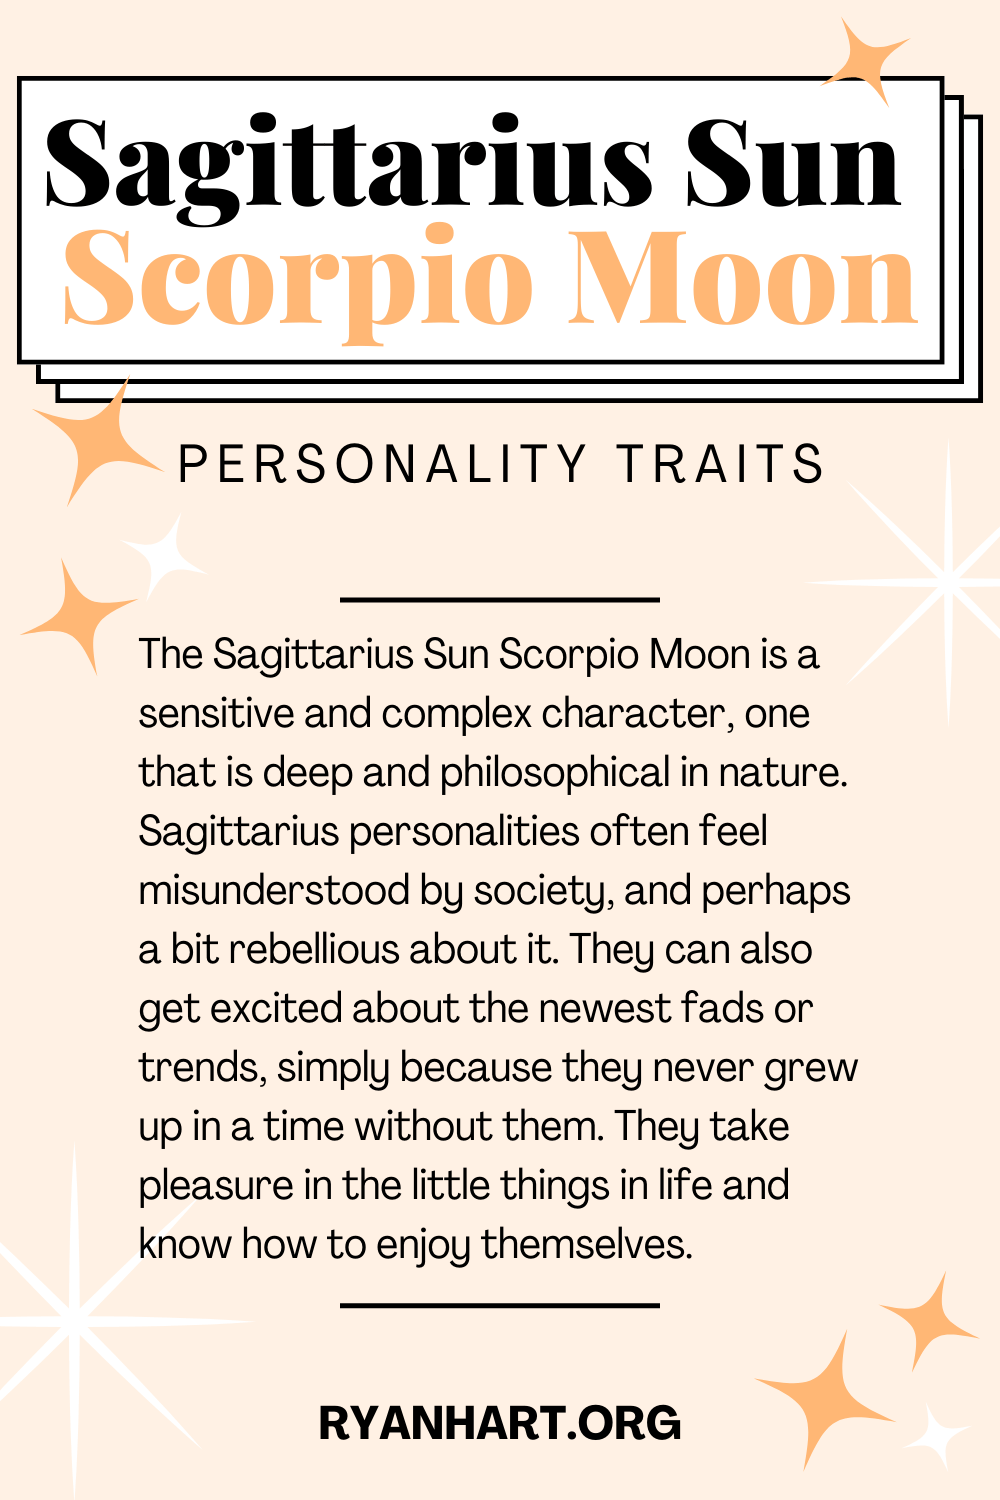 Sagittarius Sun Scorpio Moon Description